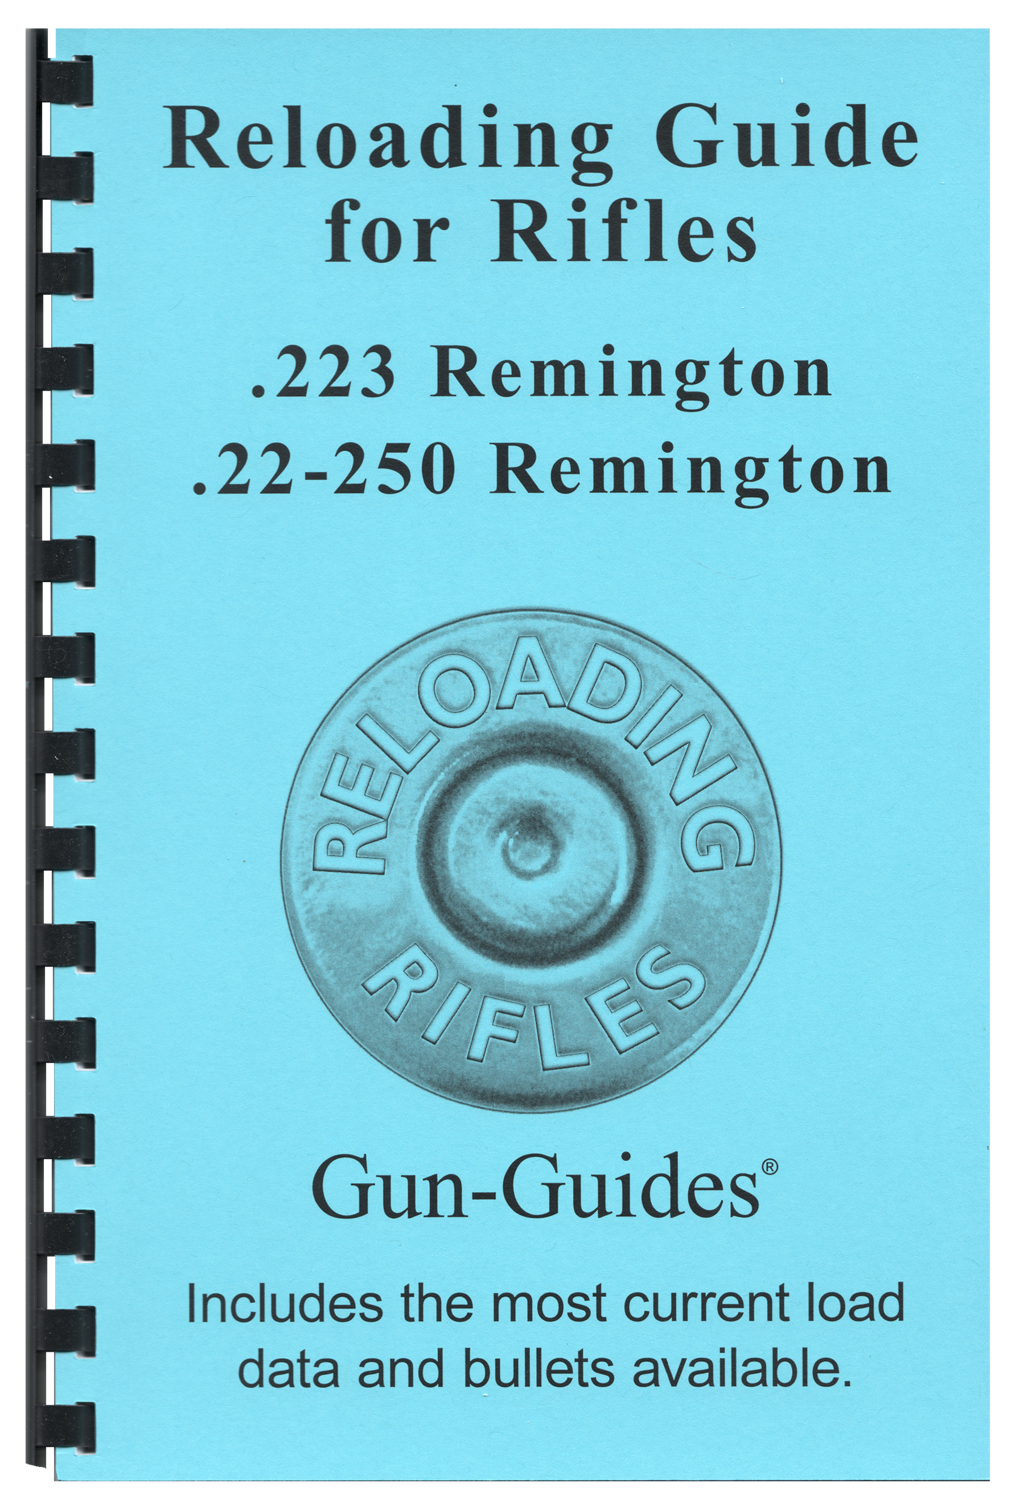 Reloading Guide Rifles - .223 Remington and 22-250 Remington - NEW 2017 Gun-Guides®